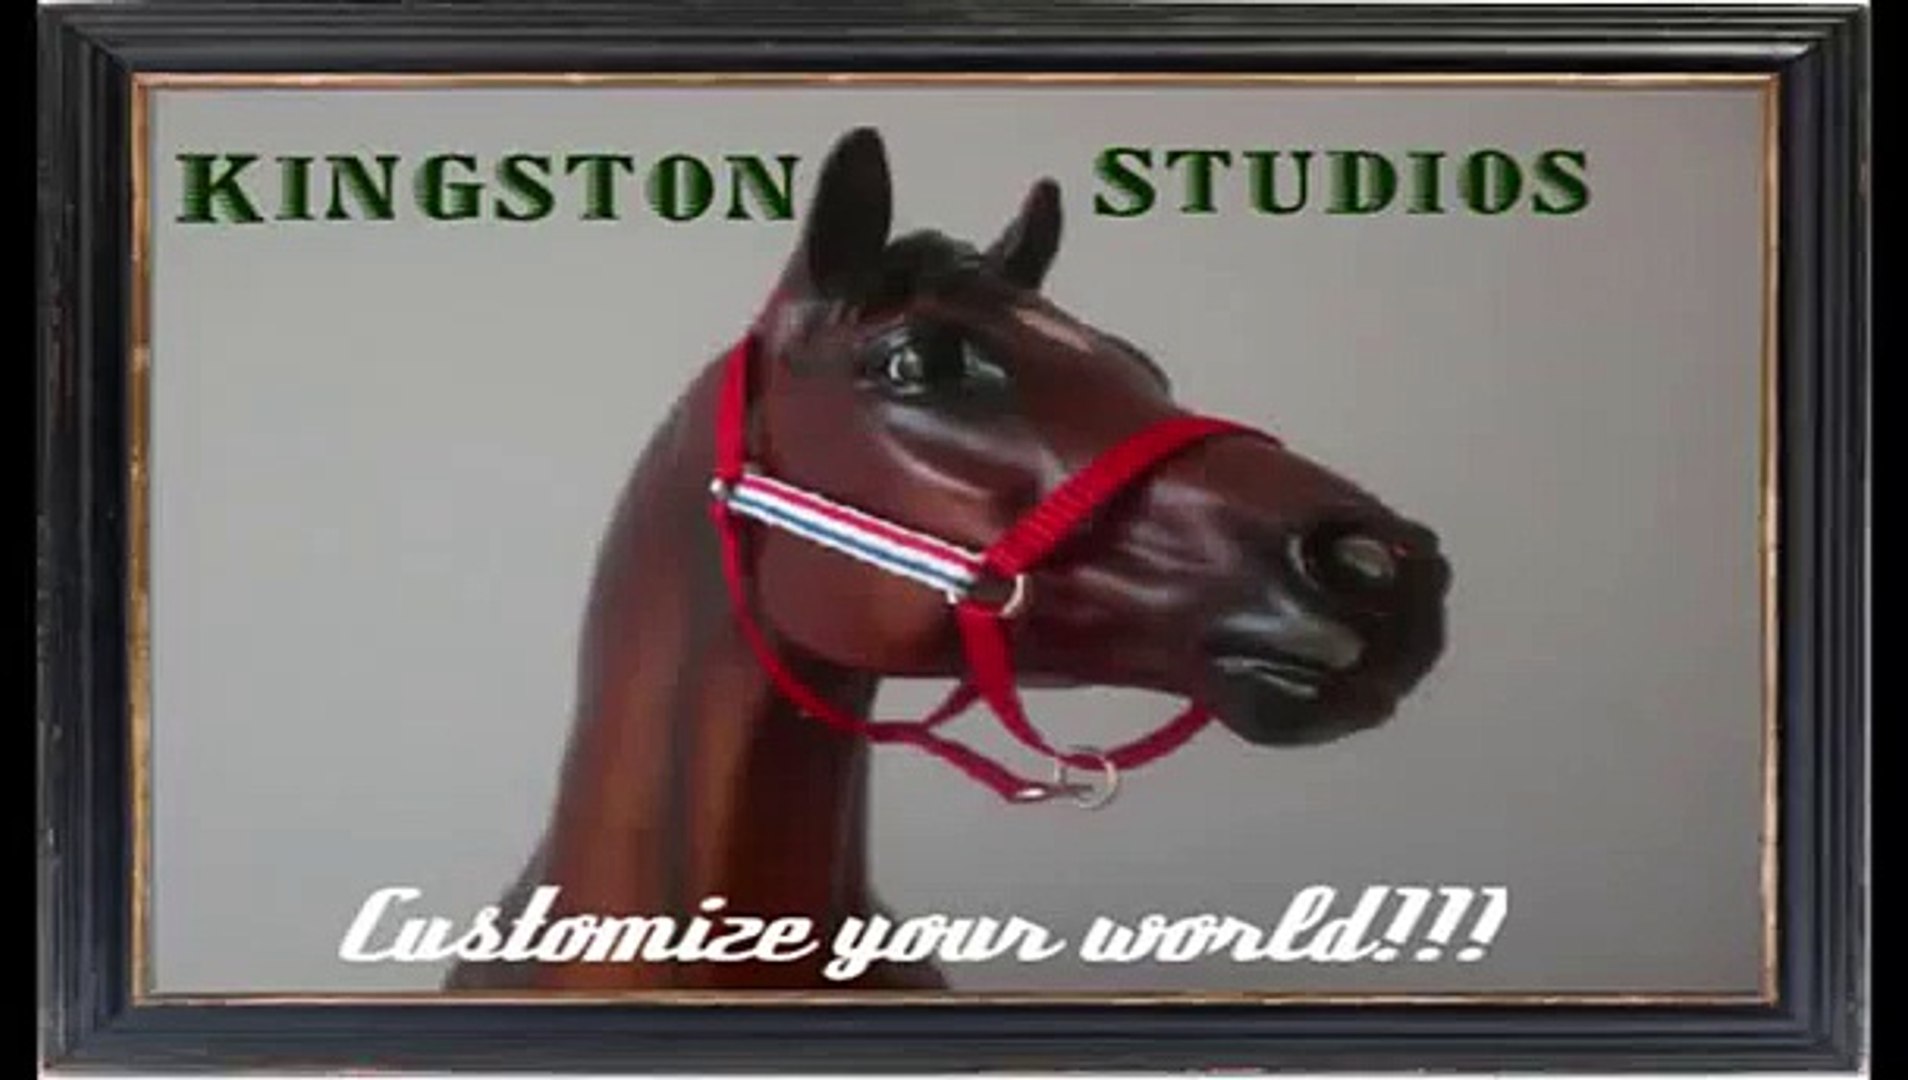 Updated Tackshop-Kingston Studios